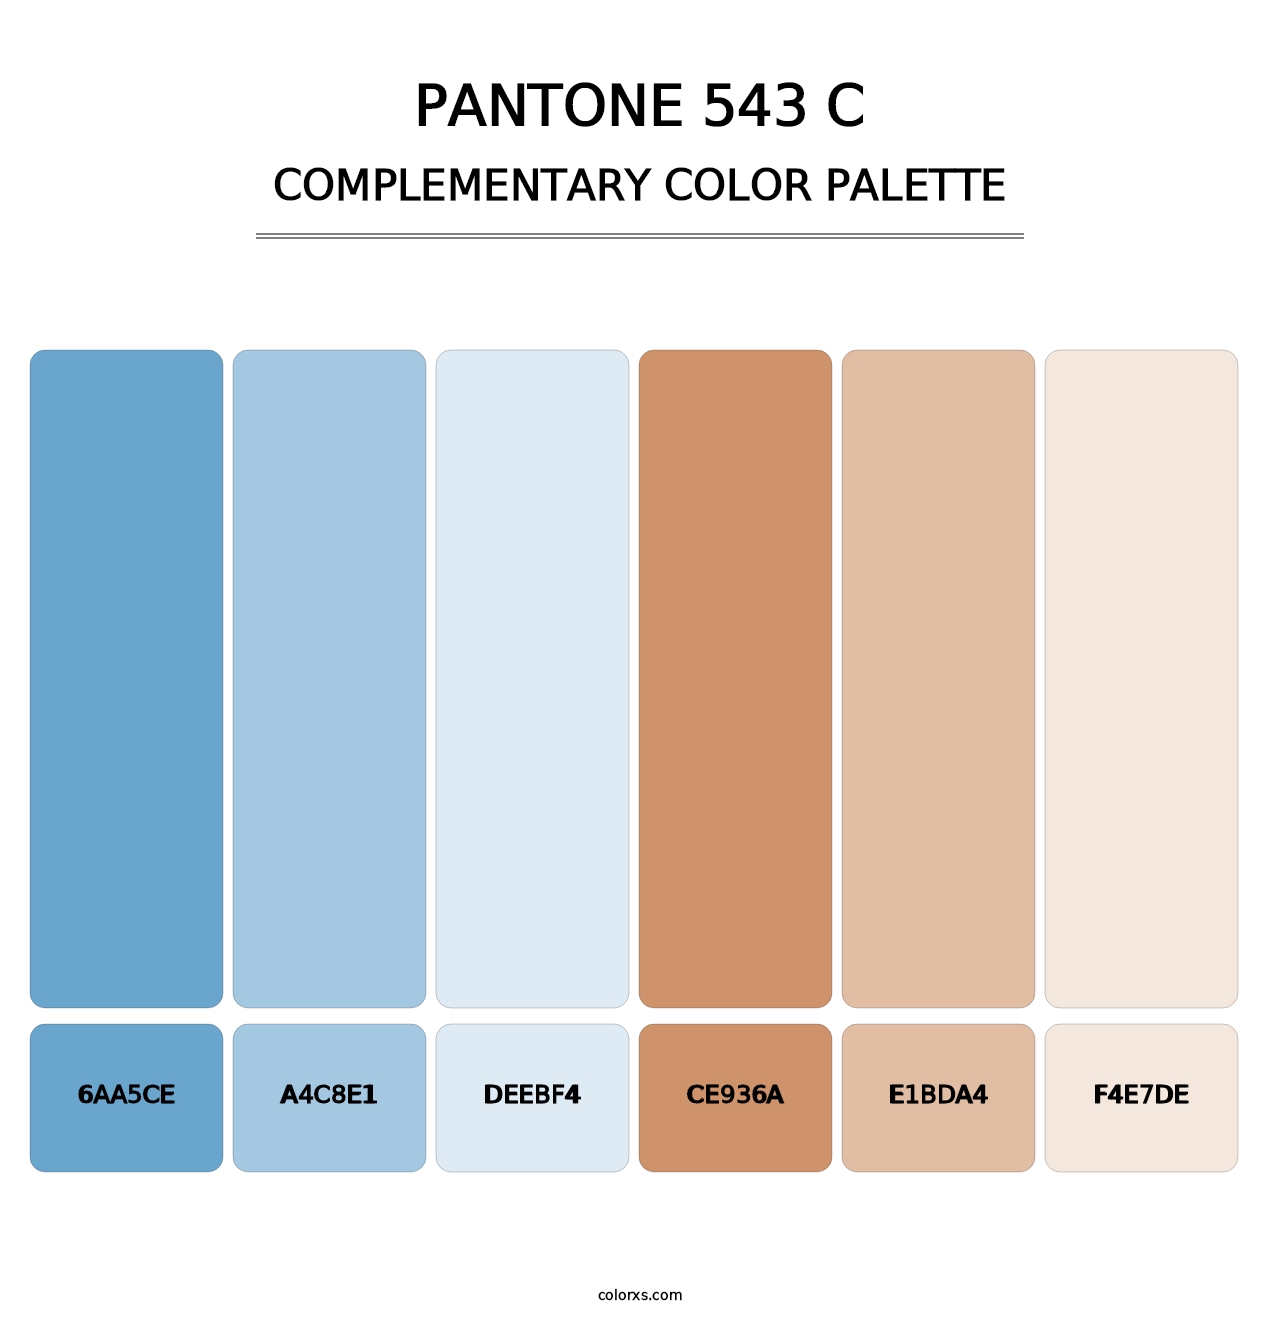 PANTONE 543 C - Complementary Color Palette